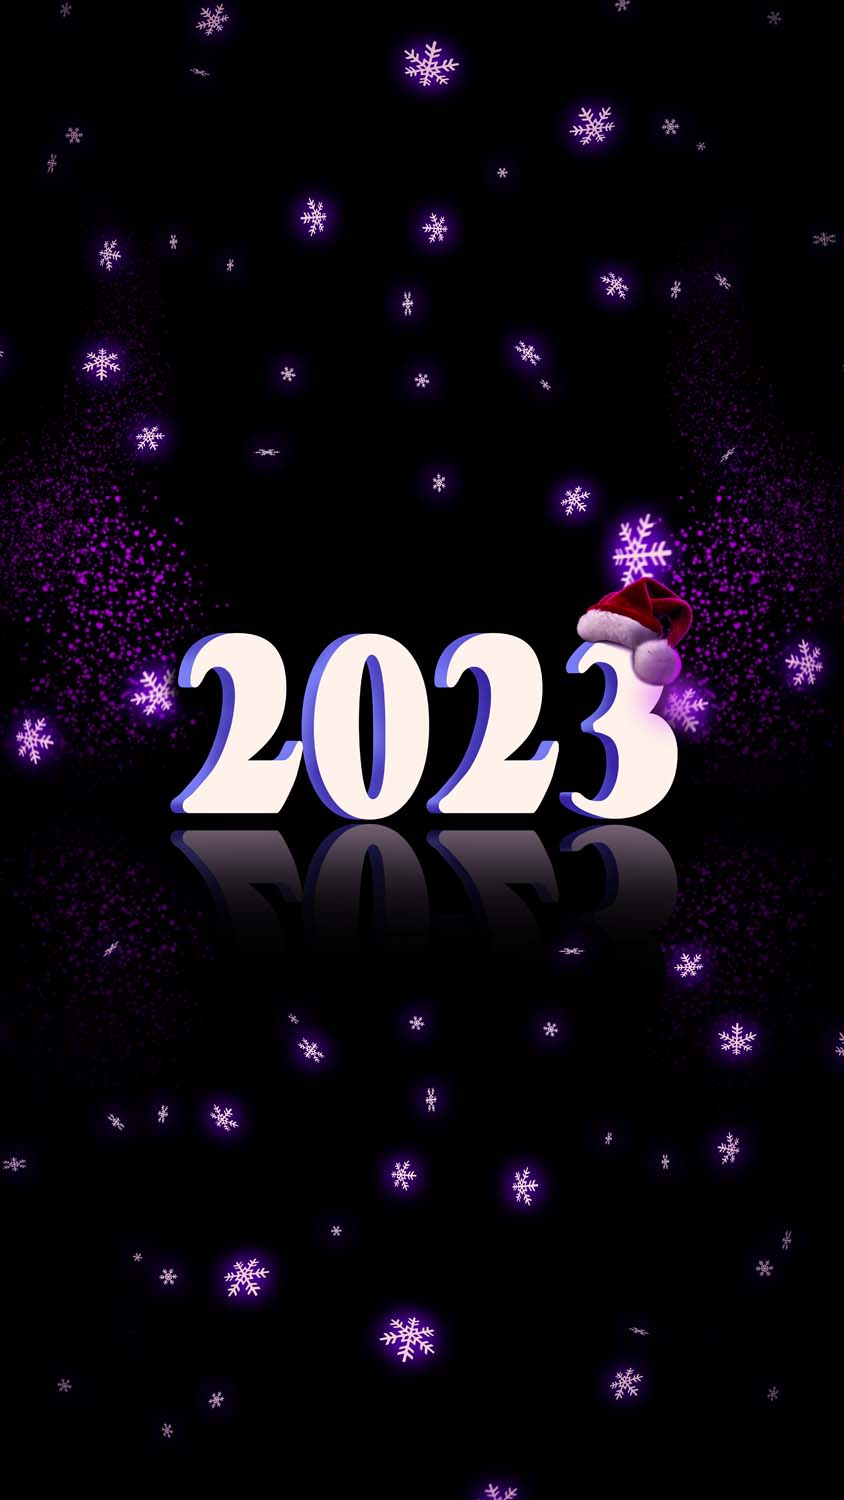 2023 New Year Celebration iPhone Wallpaper HD